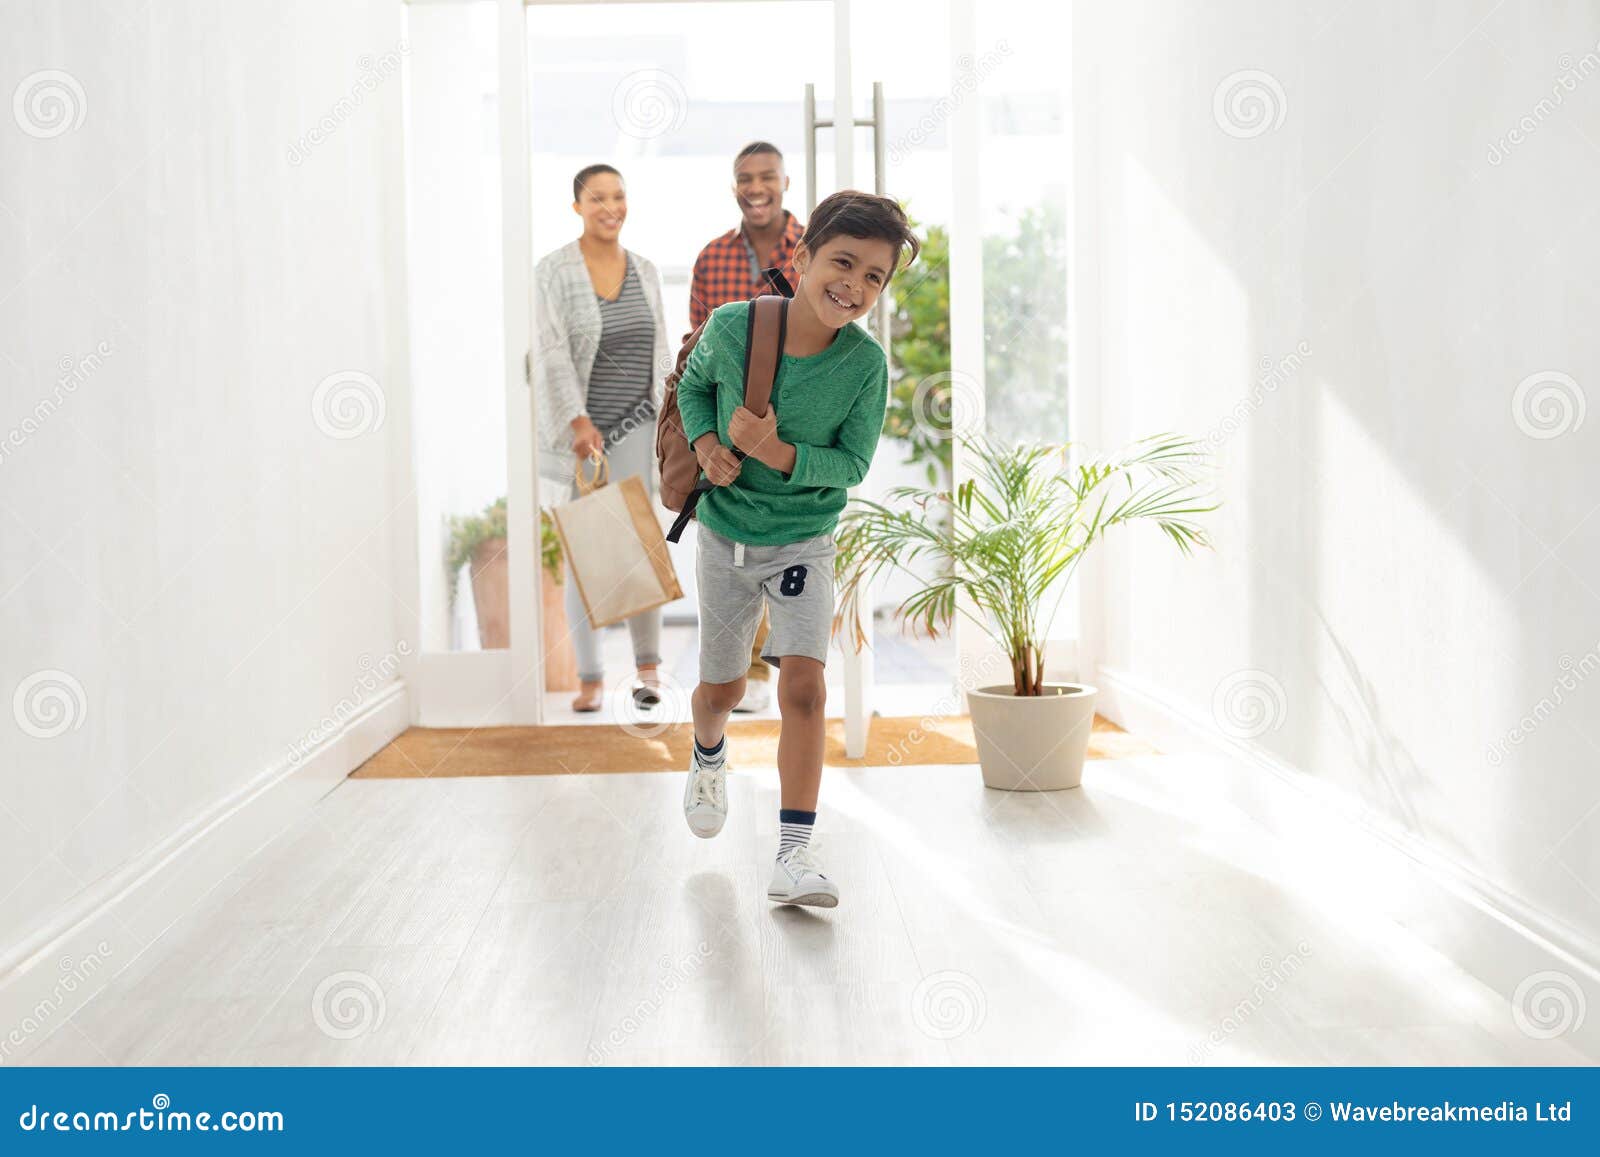 family entering their house